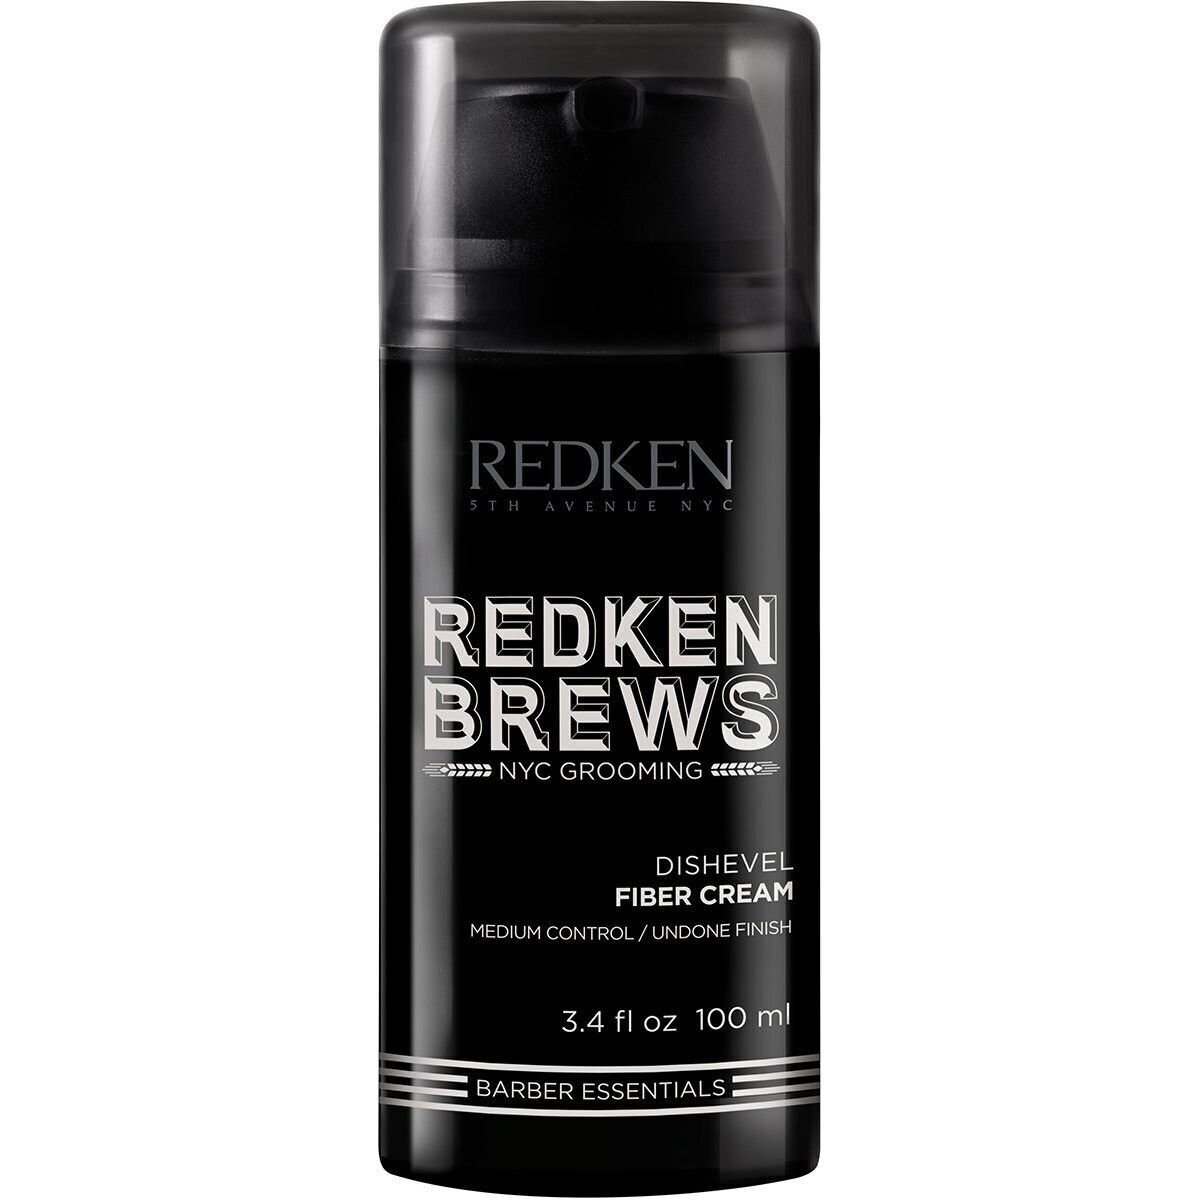 Redken Brews Fiber Cream Dishevel